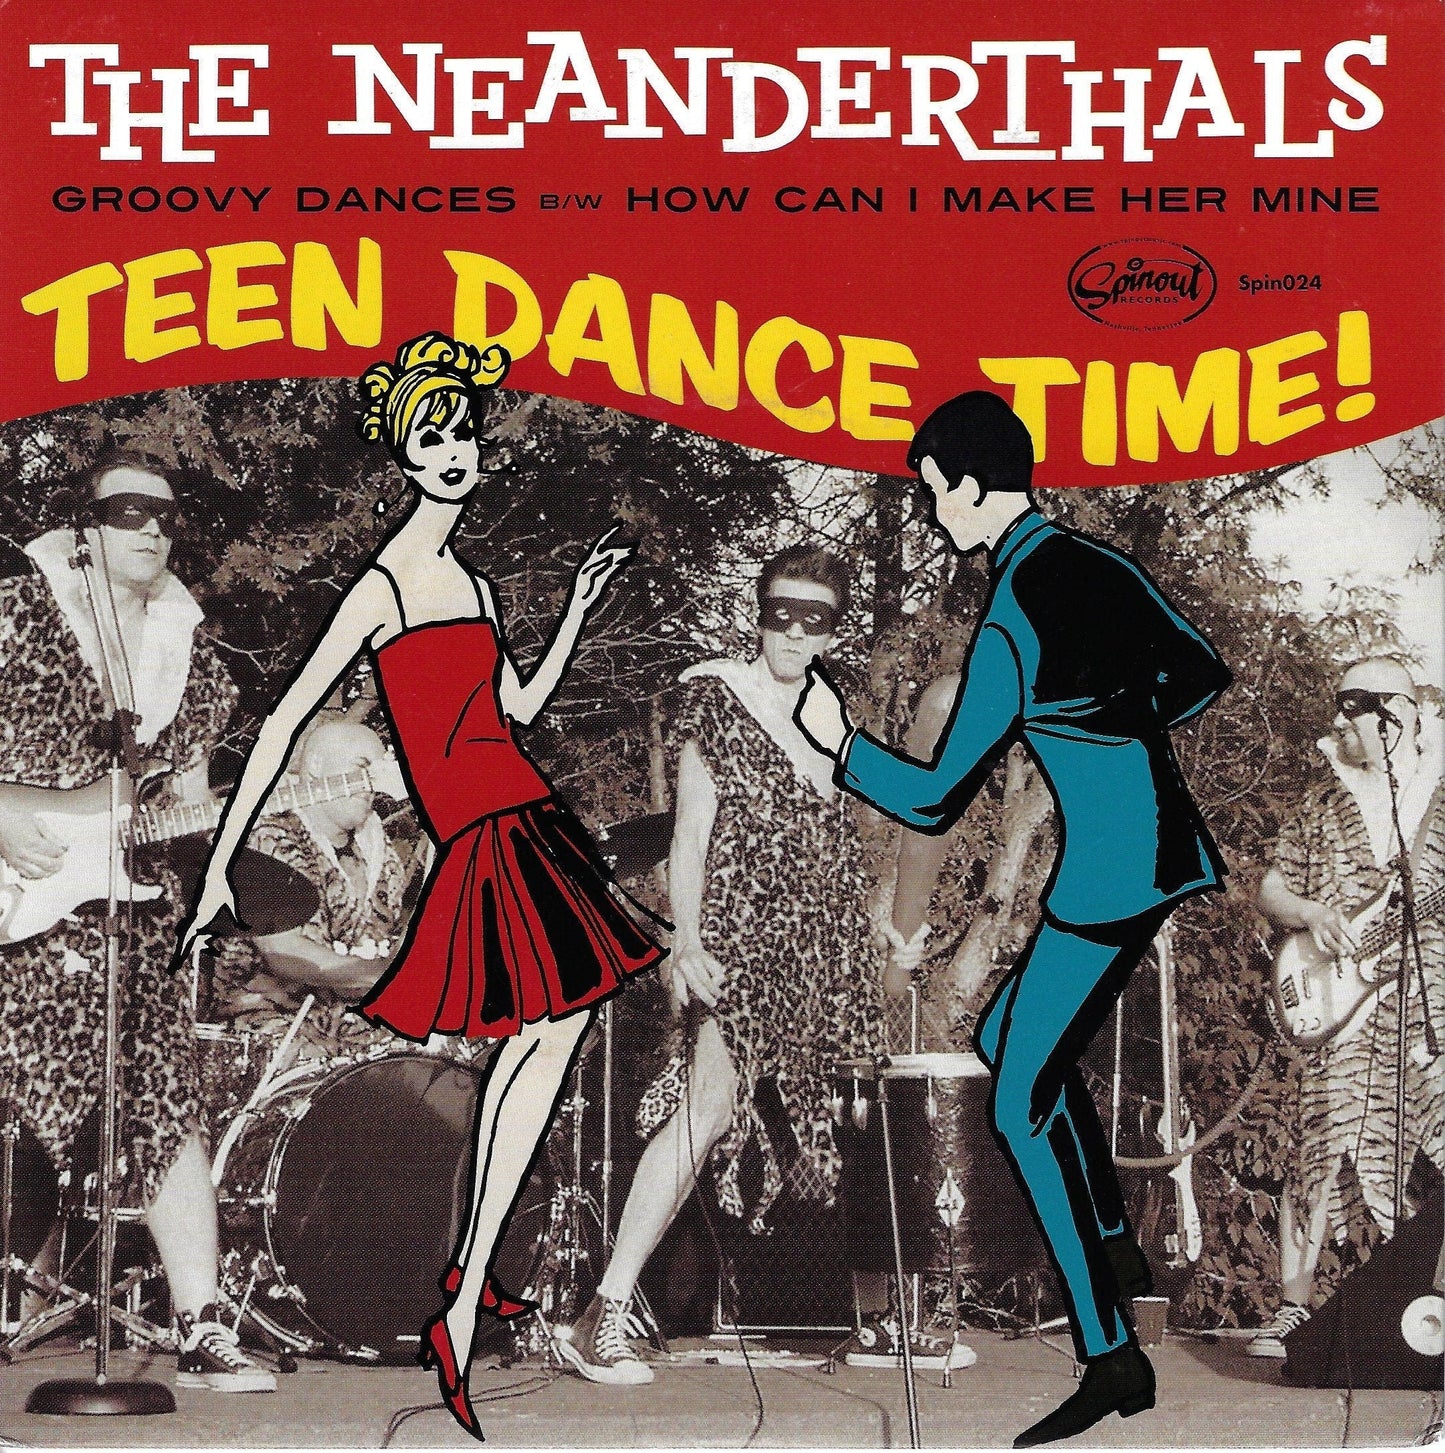 The Neanderthals "Teen Dance Time!" Single